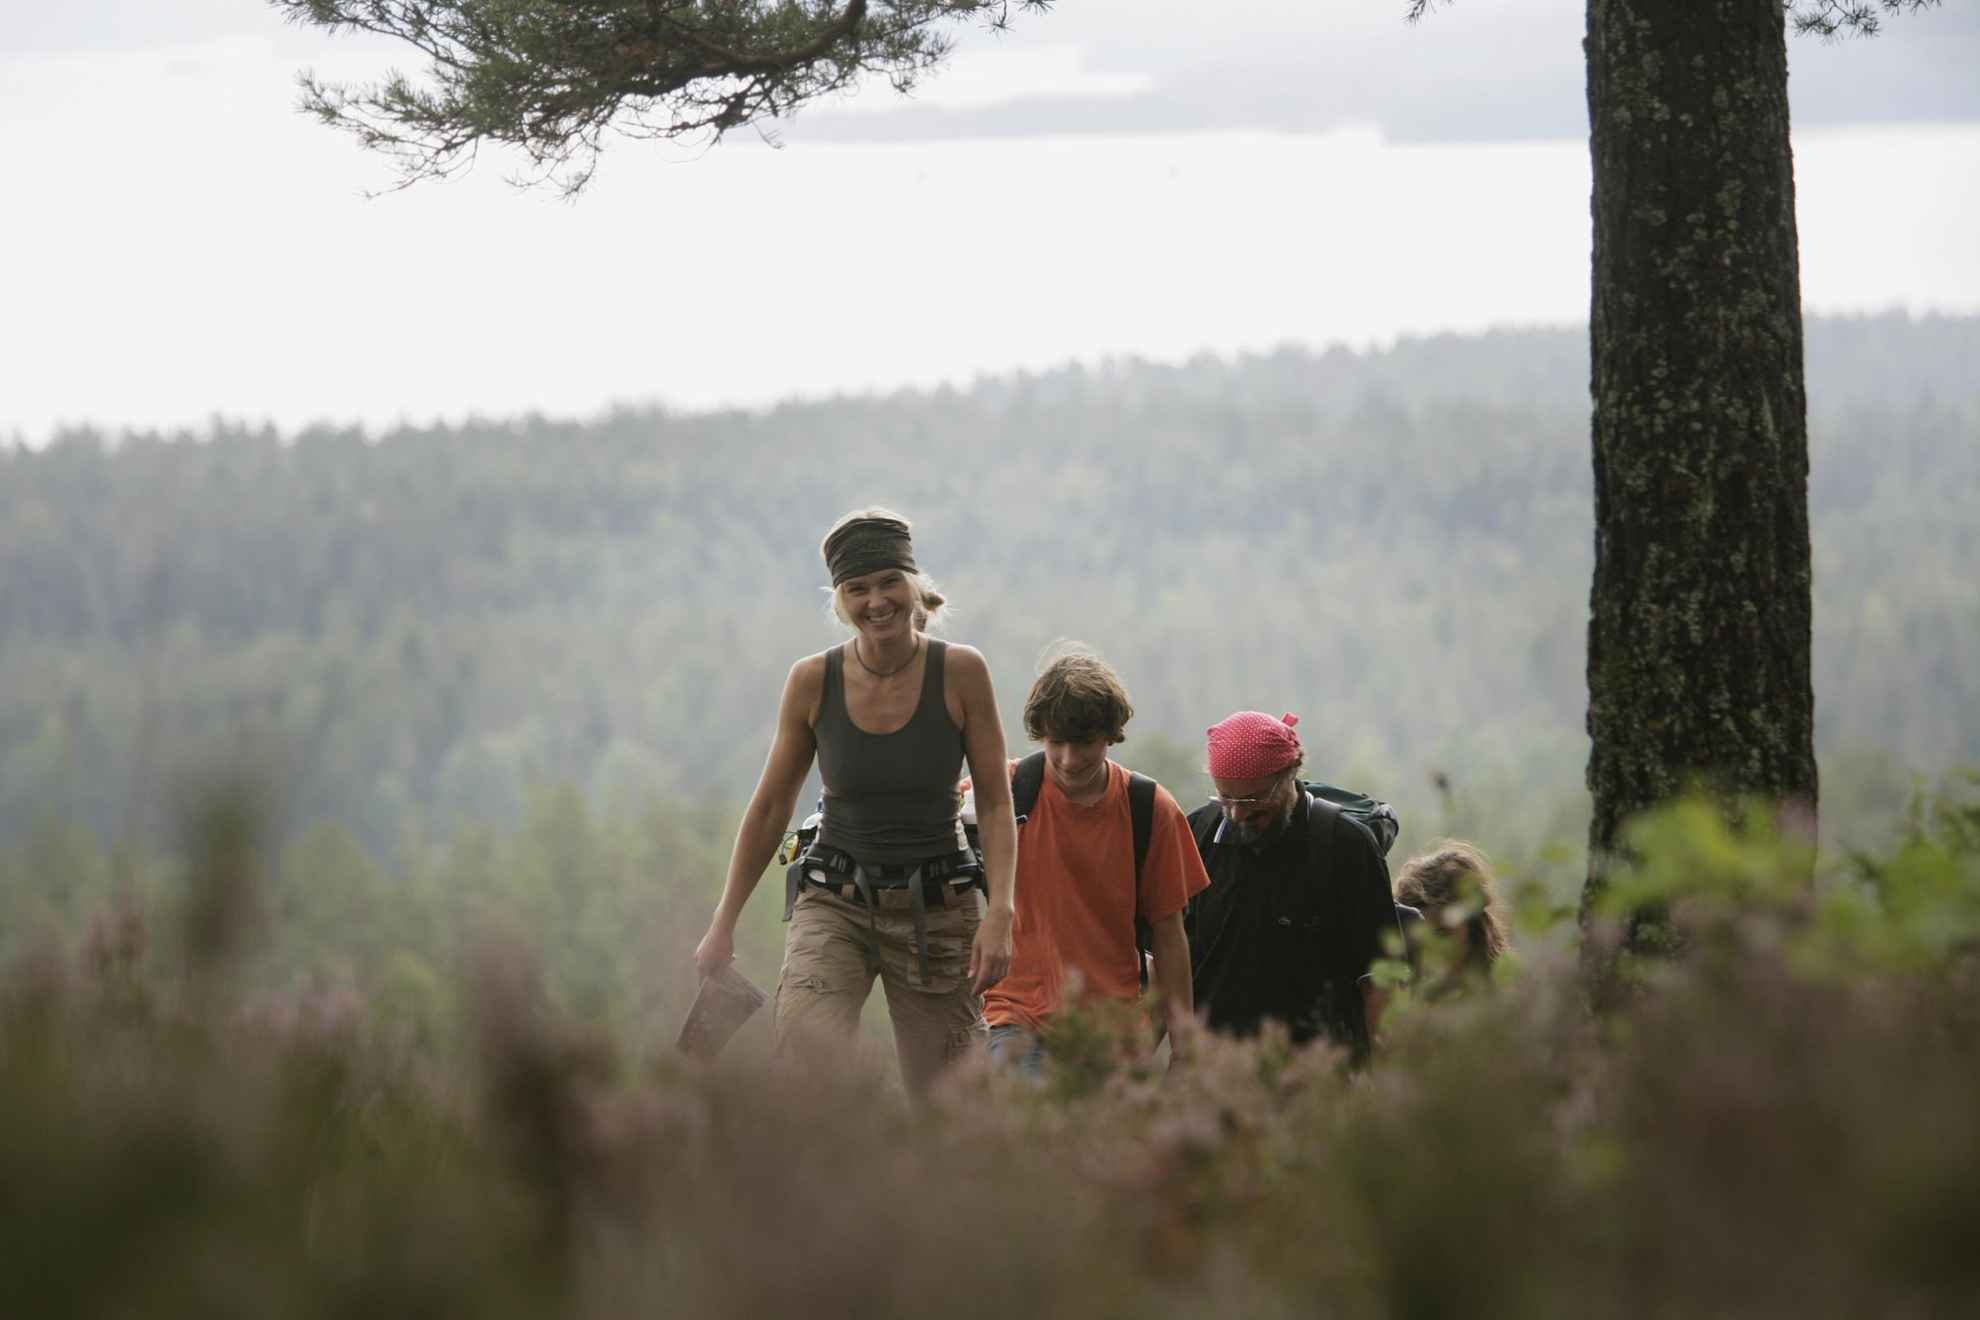 Hiking i Glaskogen nature reserve, Värmland